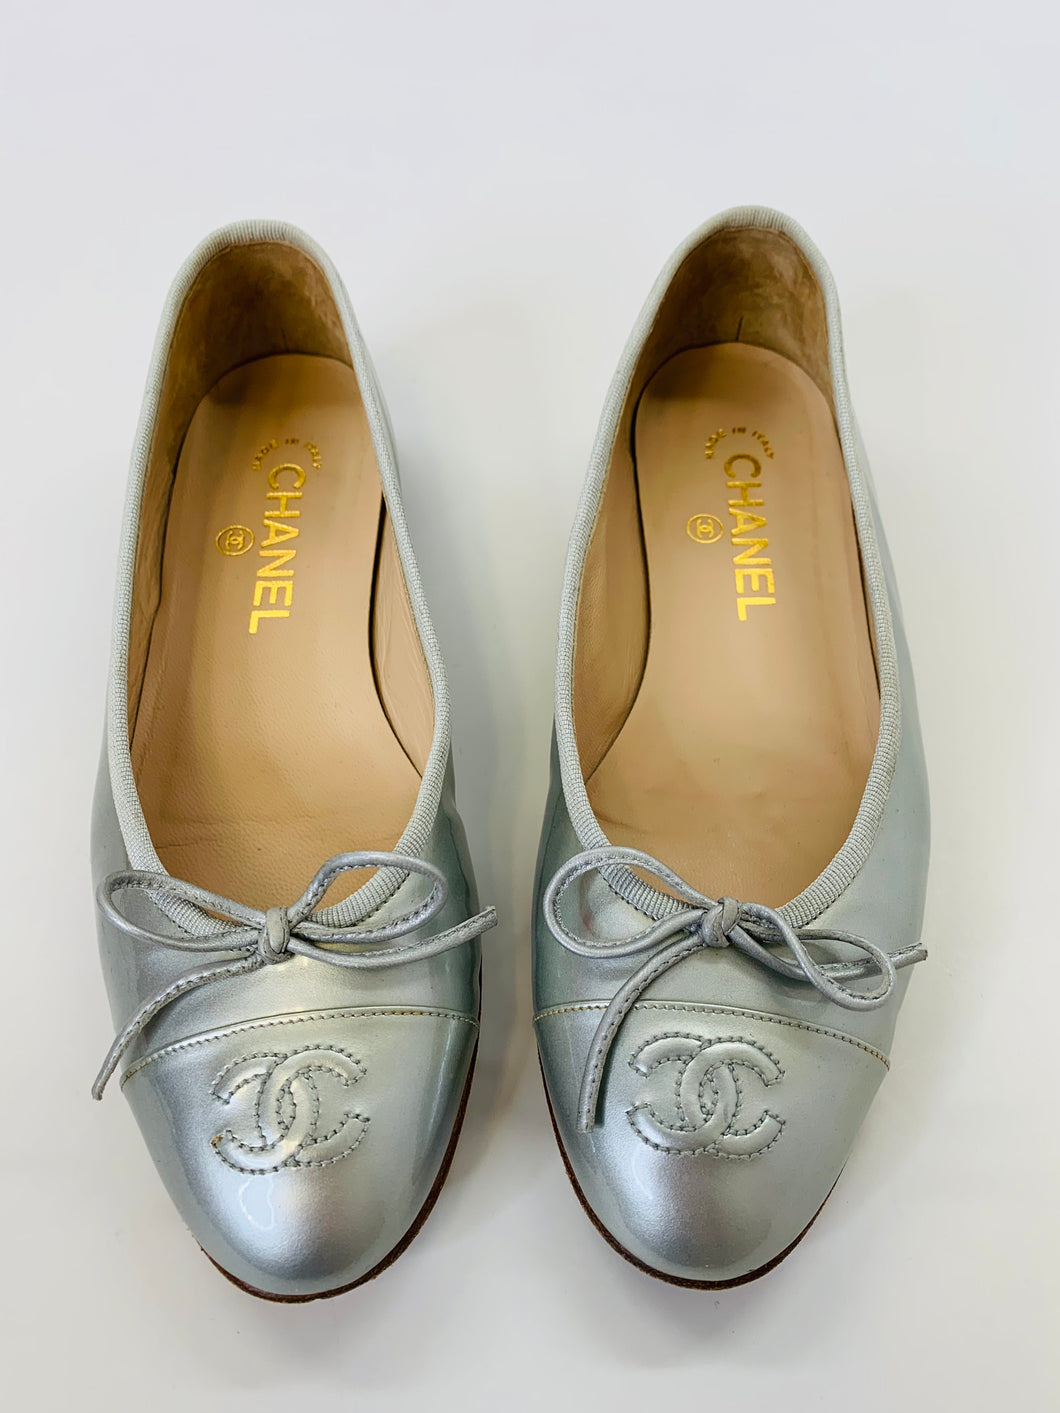 Chanel Black/Silver Leather CC Cap Toe Ballet Flat Size 6.5/37